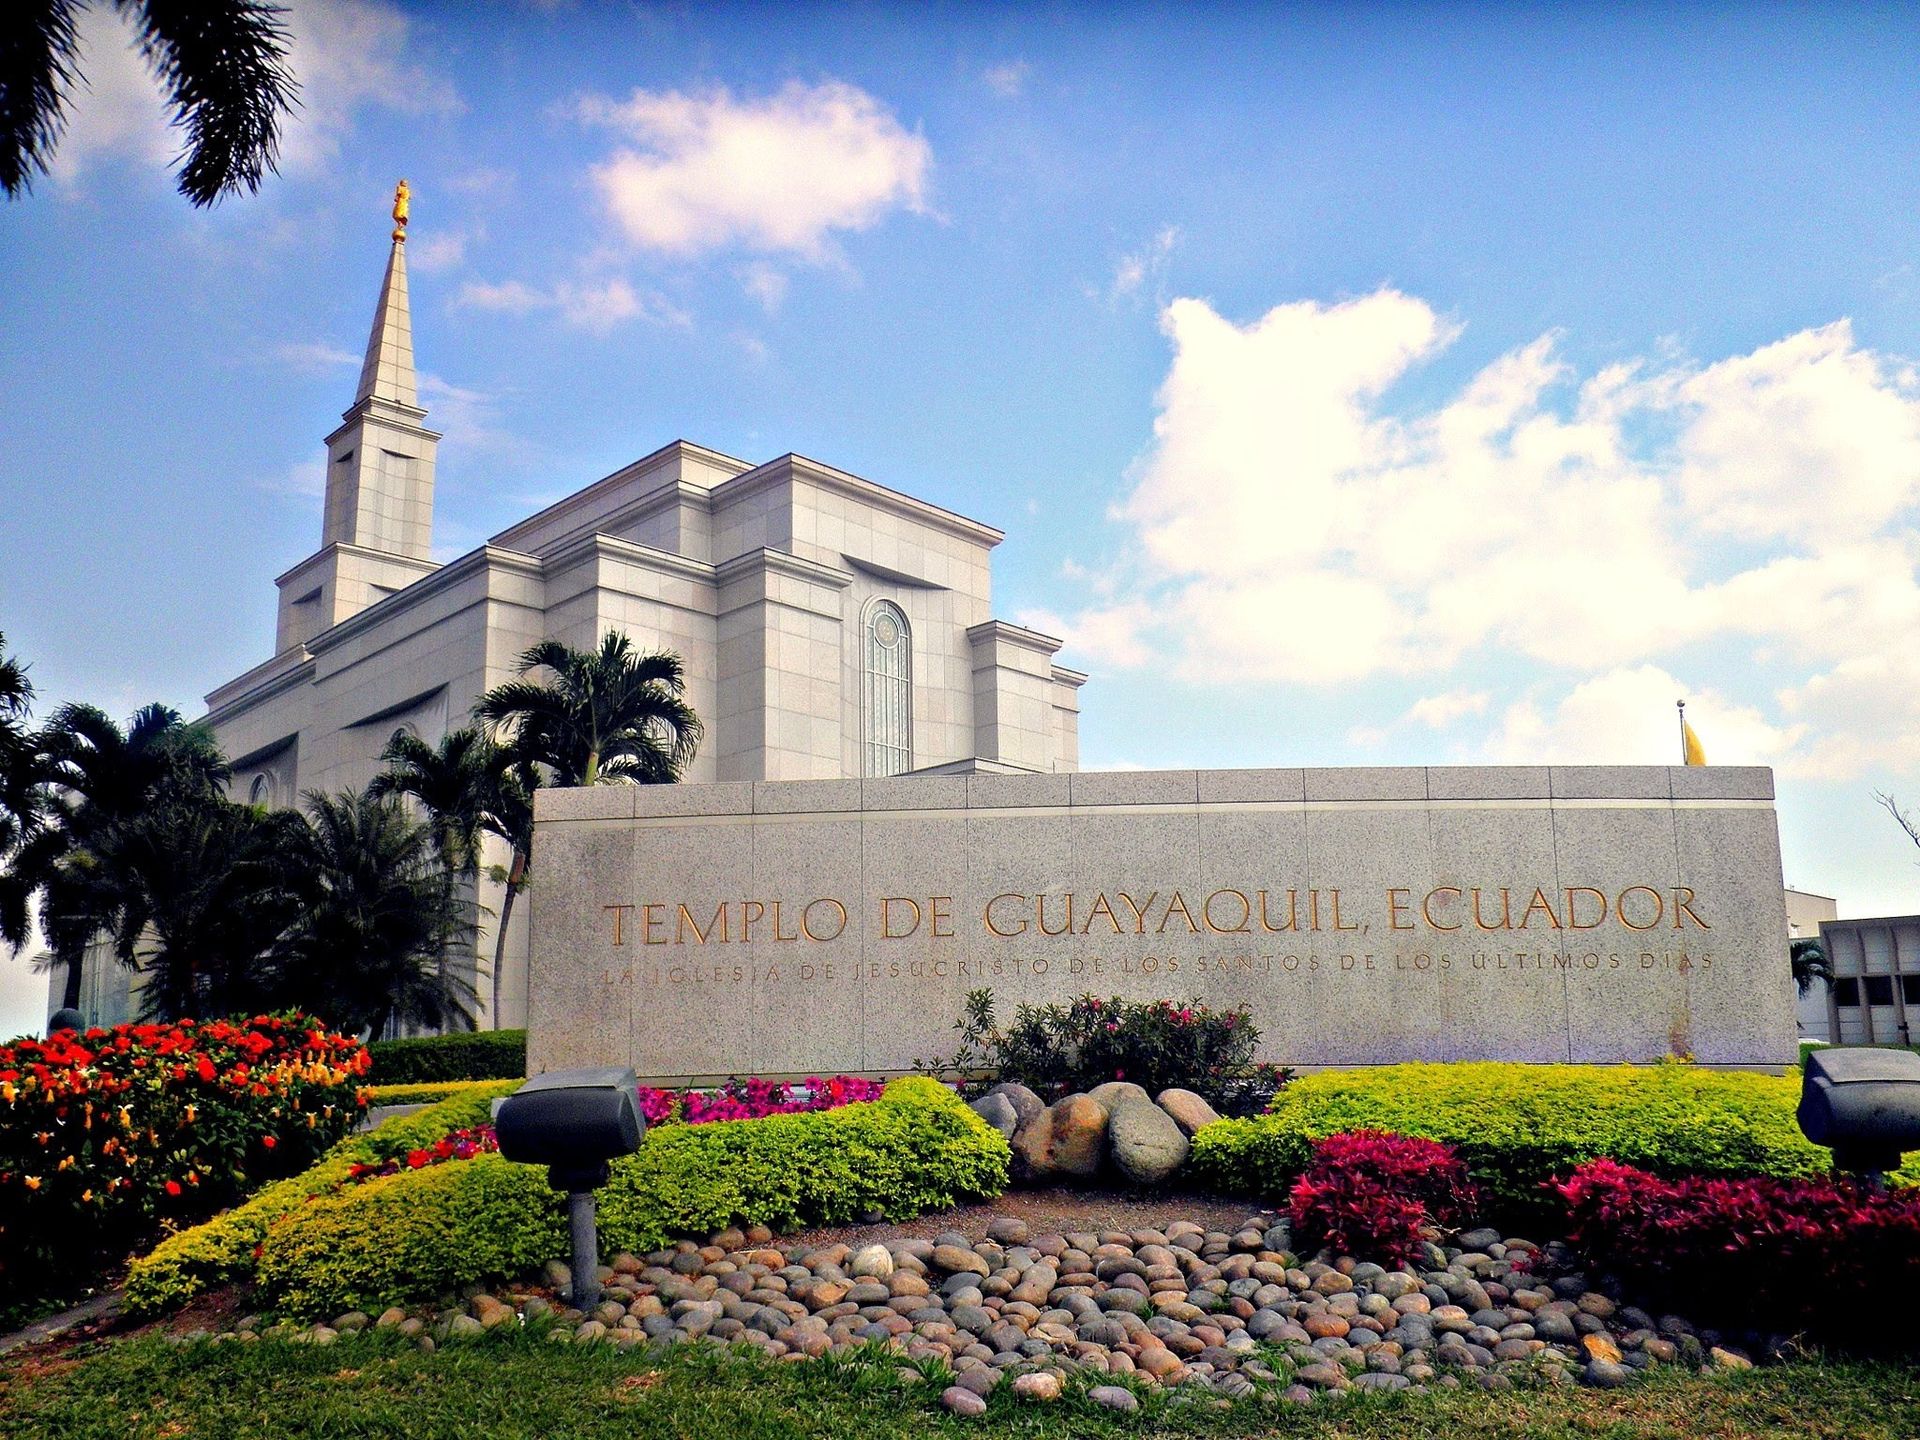 The Guayaquil Ecuador Temple name sign.